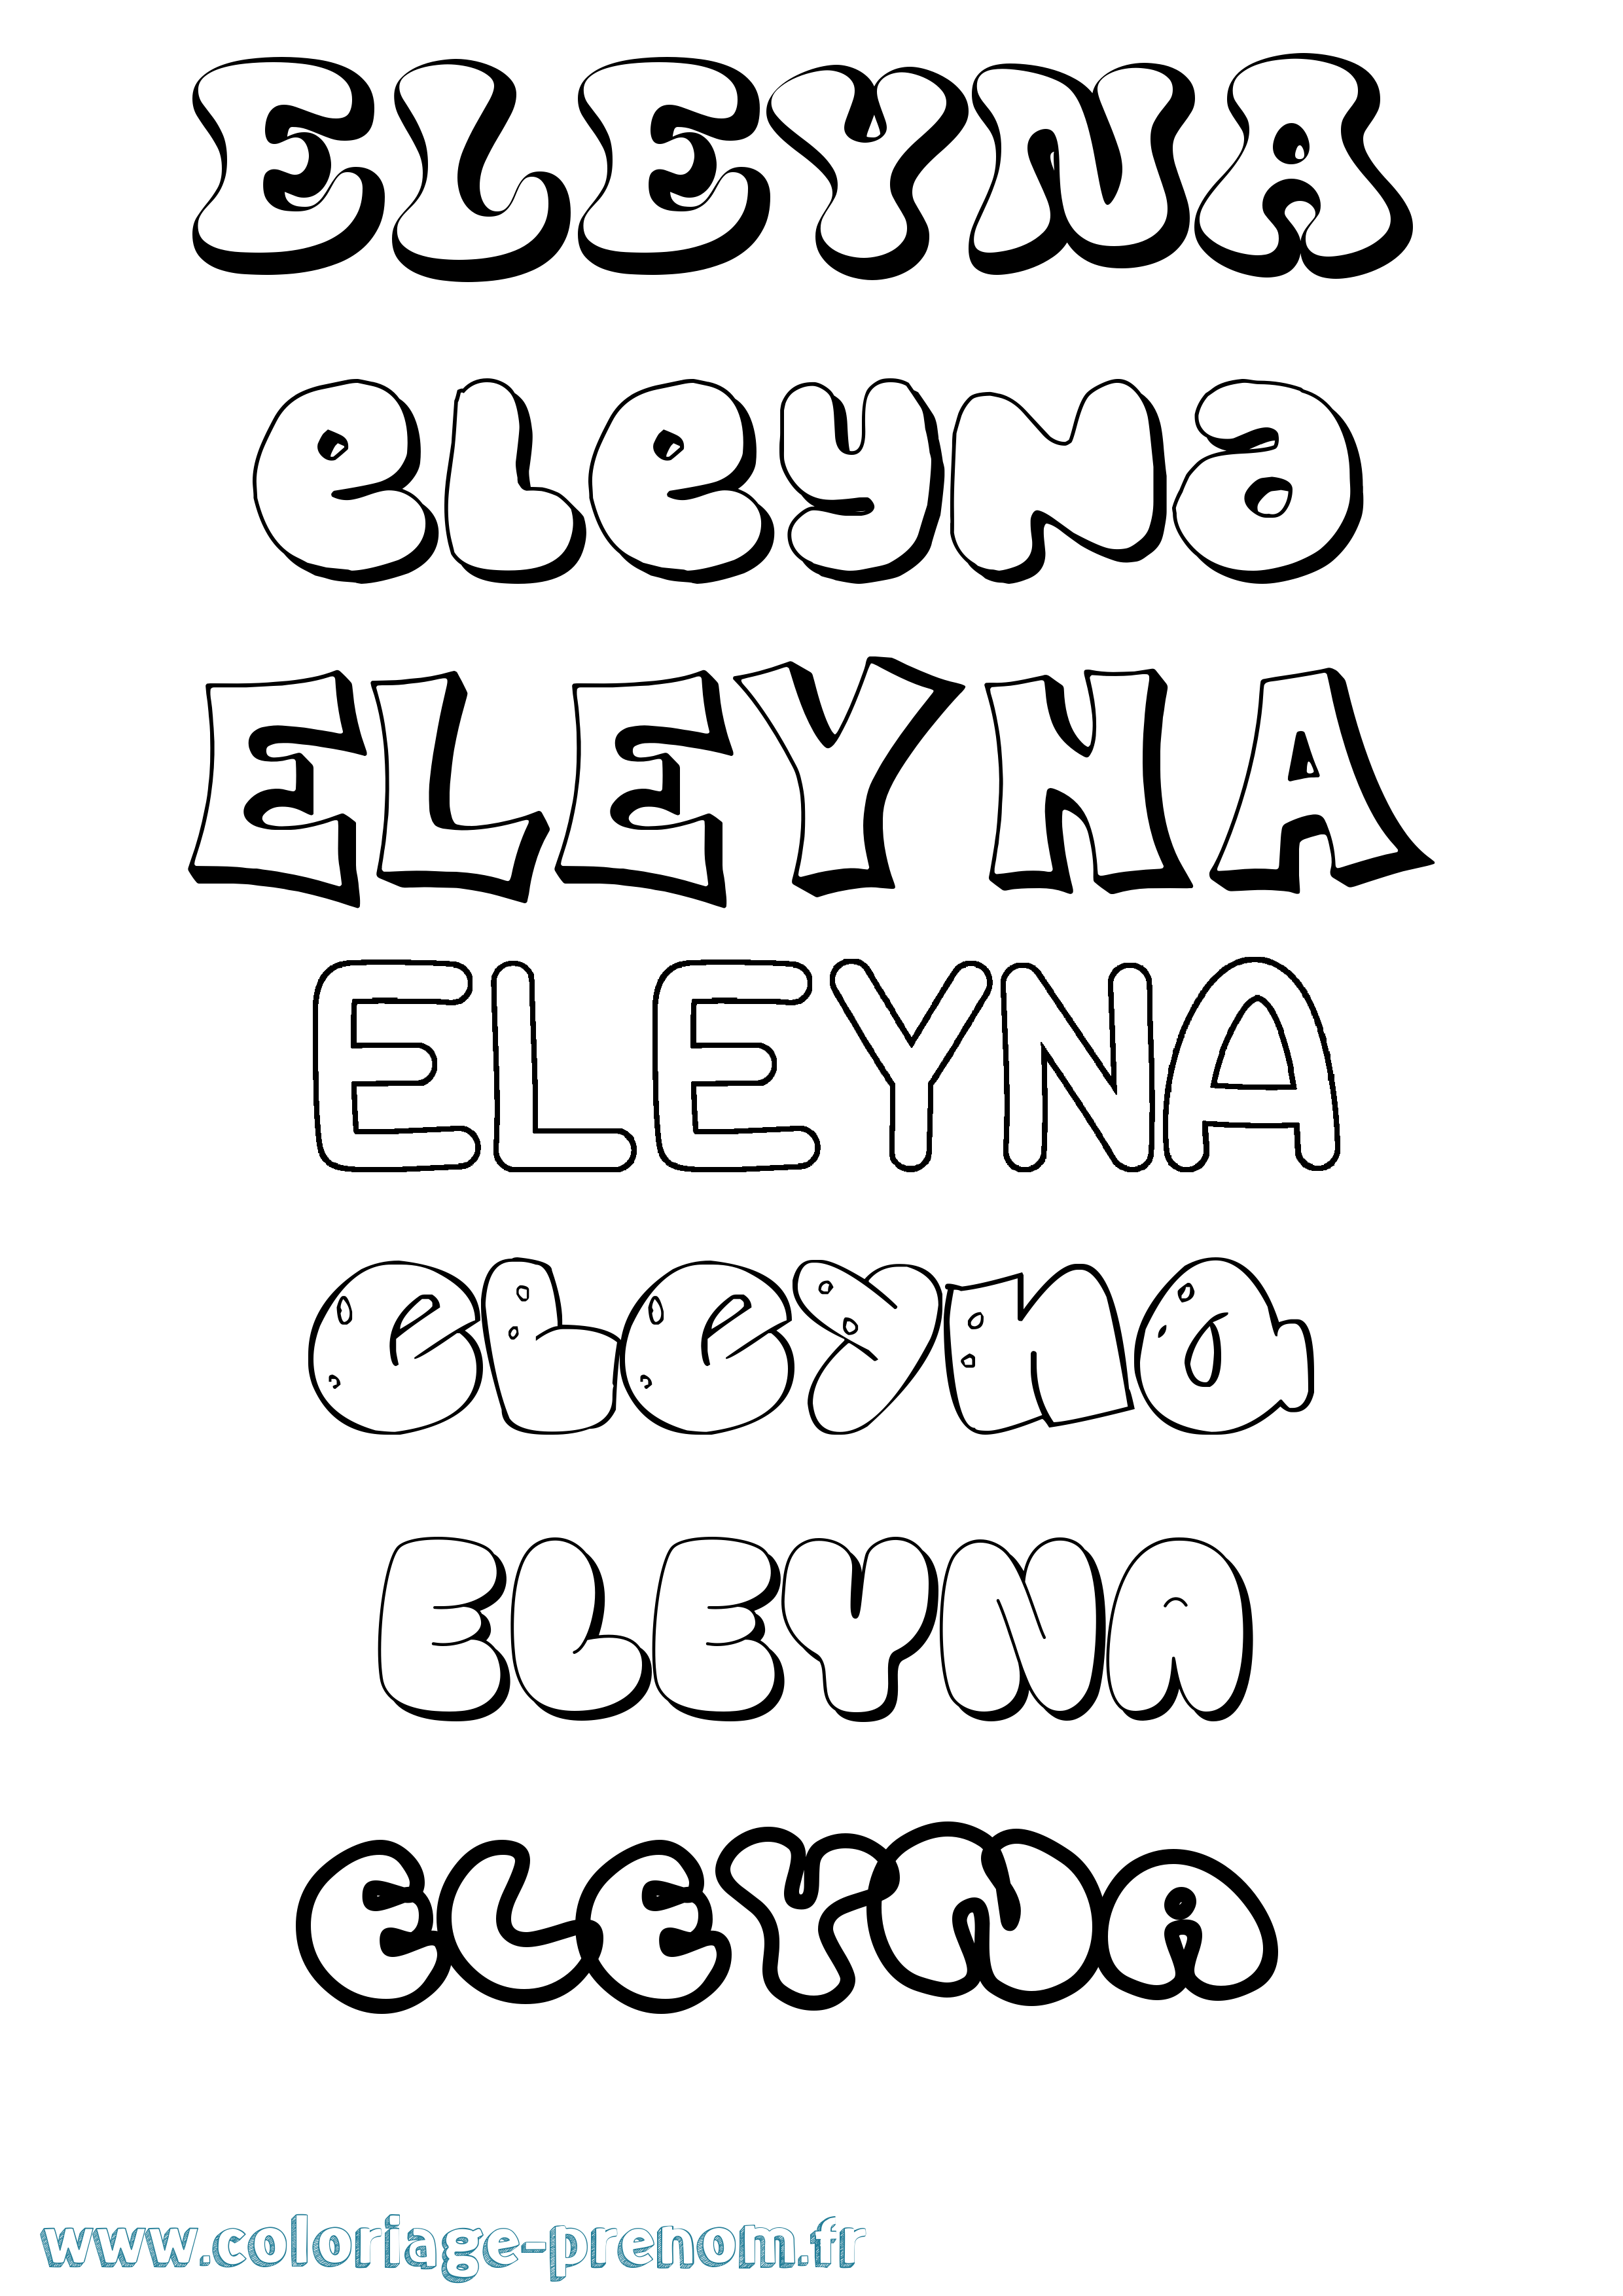 Coloriage prénom Eleyna Bubble